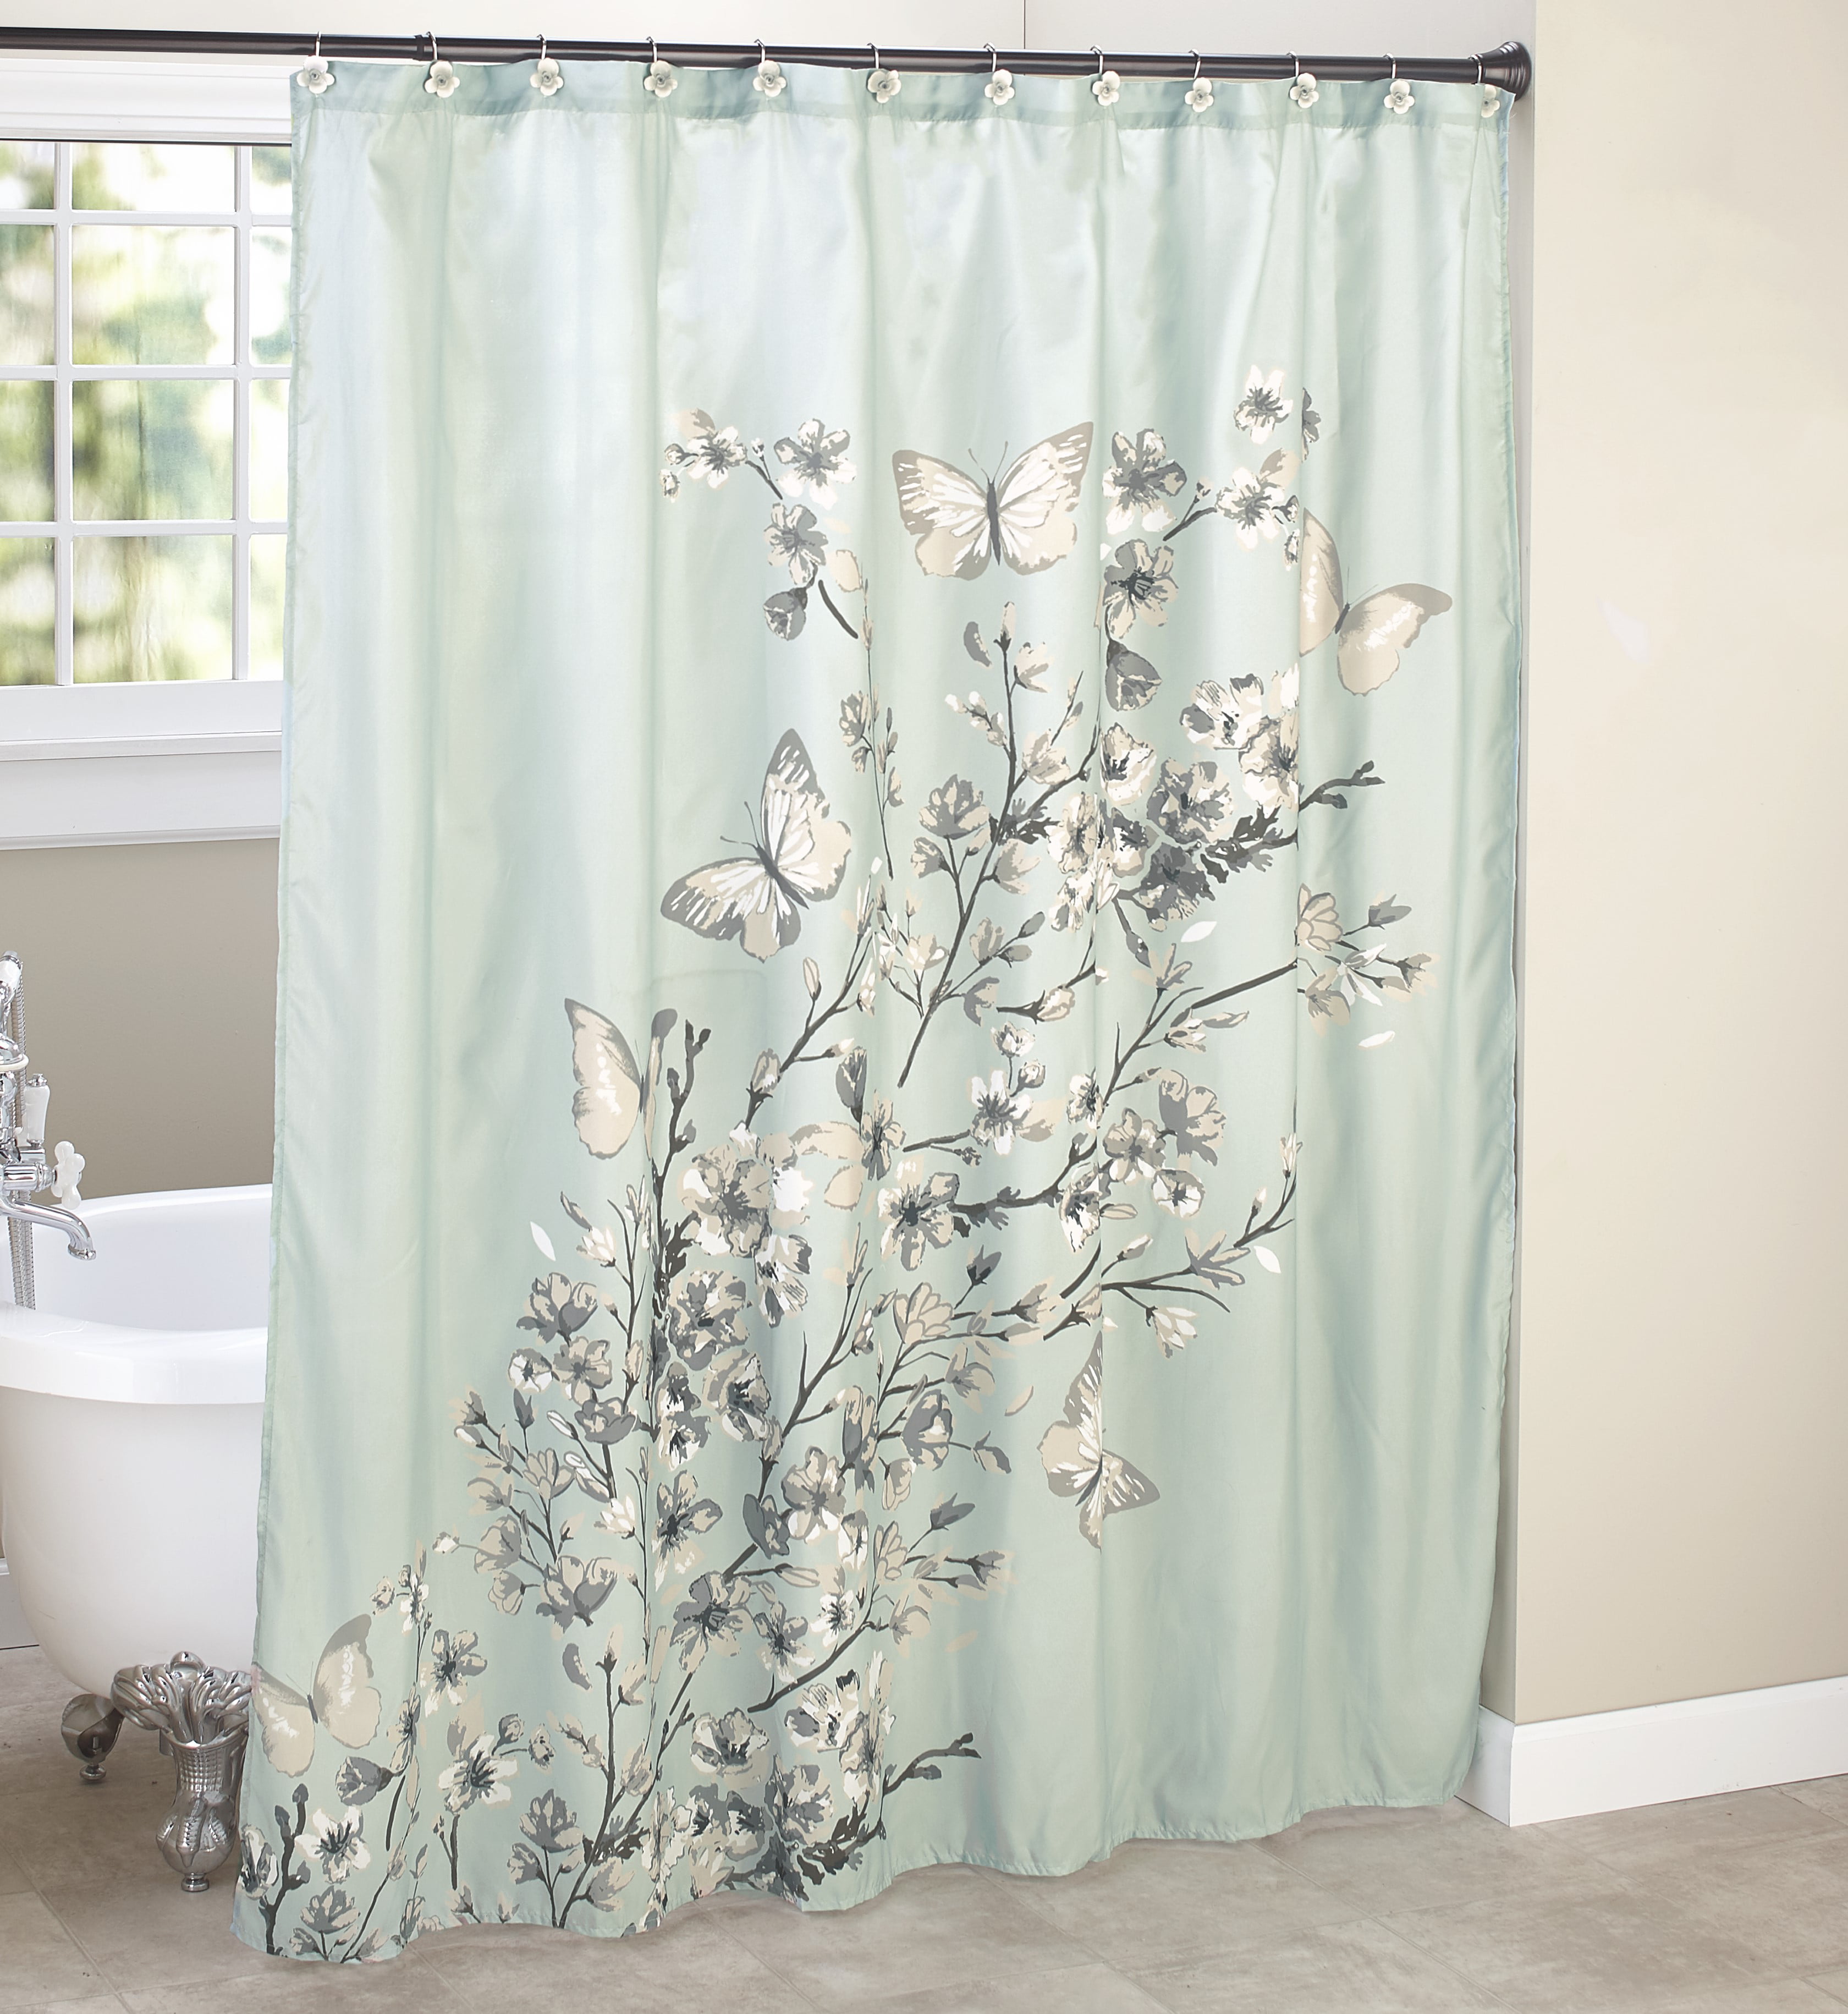 Tree Pattern Bathroom Waterproof Curtain Shower Curtain Sheer Panel Room Decor 